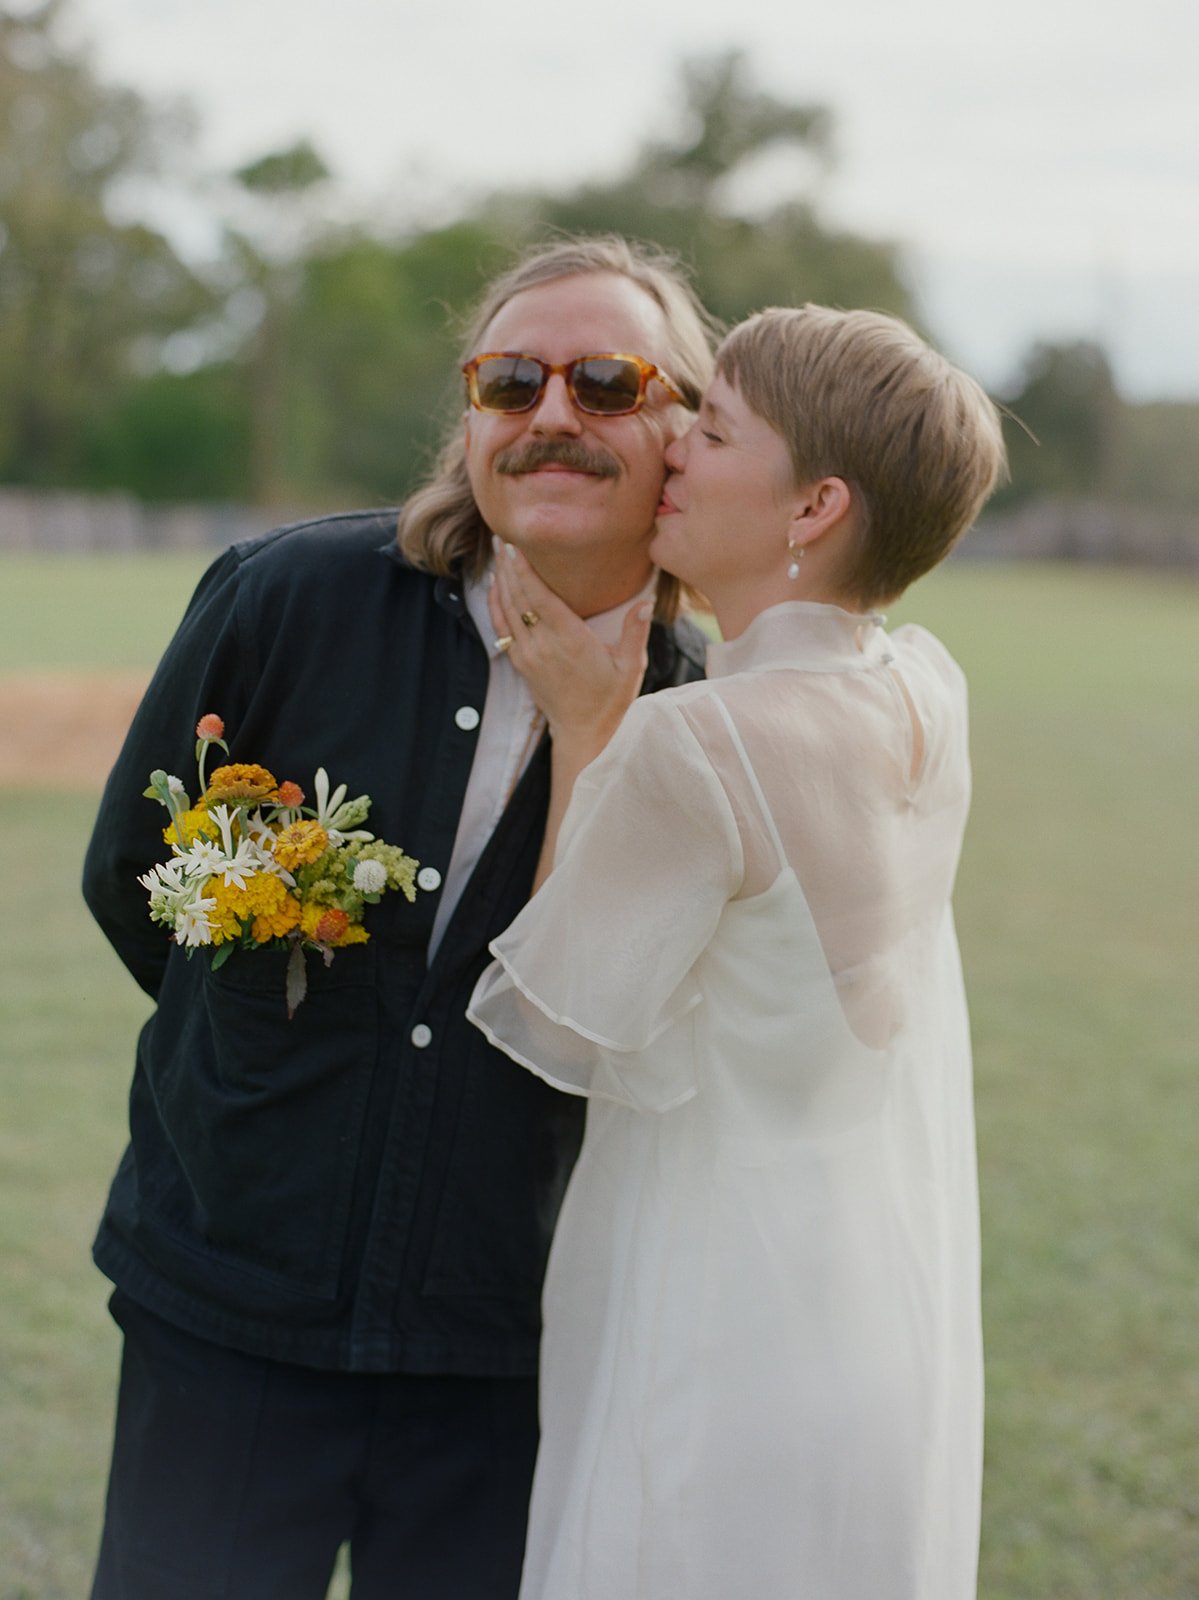 Best-Film-35mm-Austin-Wedding-Photographer-the-Long-time-Super8-48.jpg